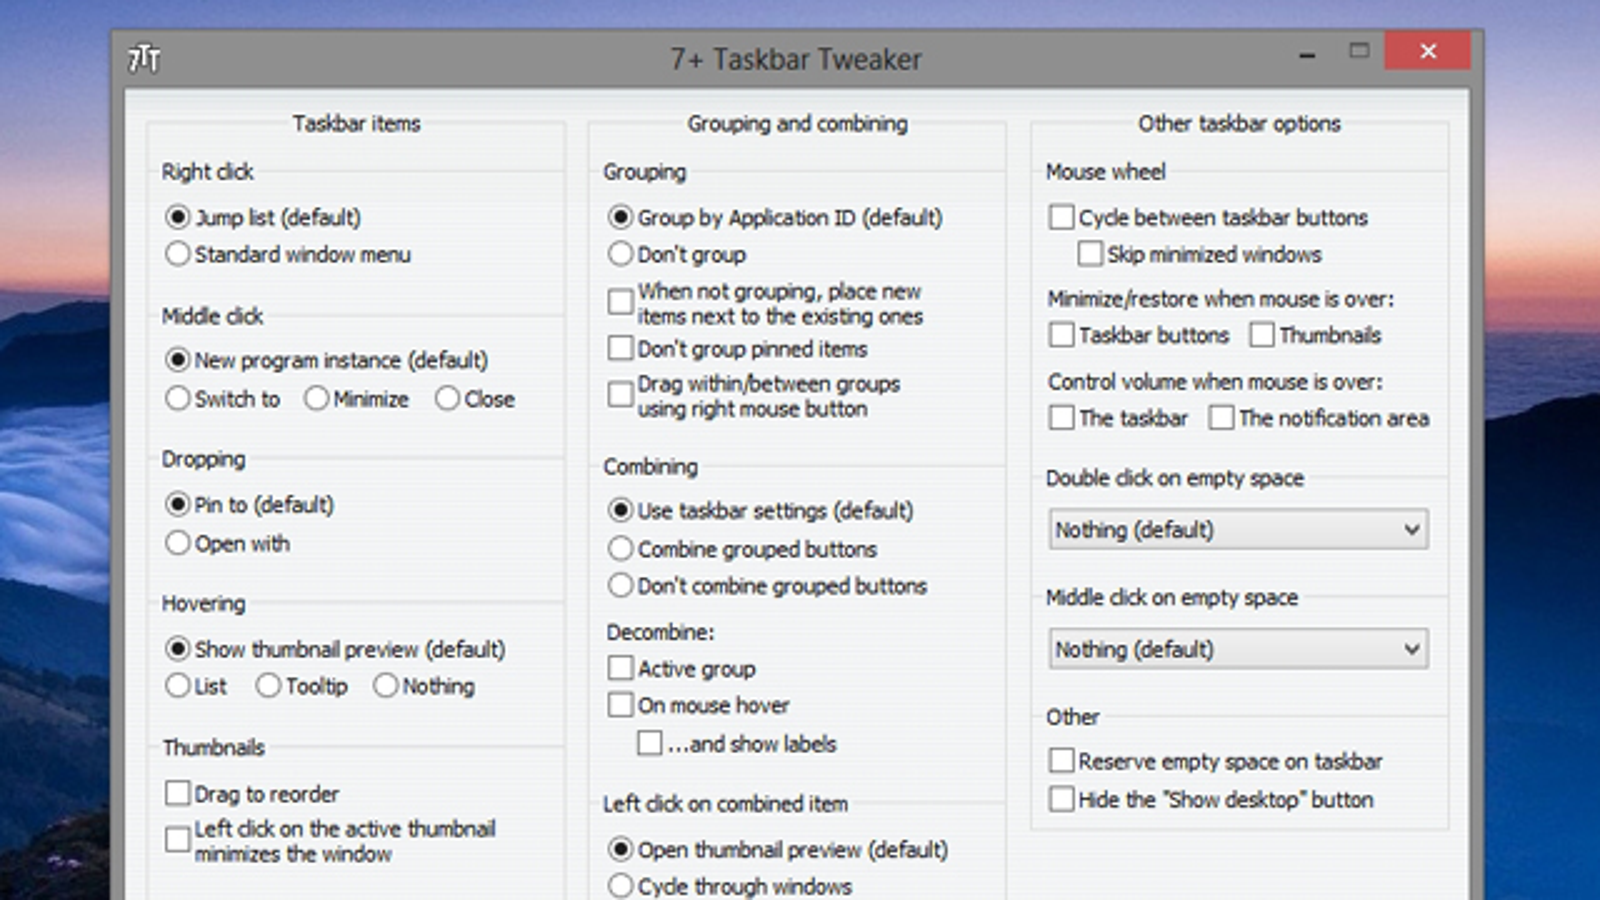 download the last version for apple 7+ Taskbar Tweaker 5.14.3.0